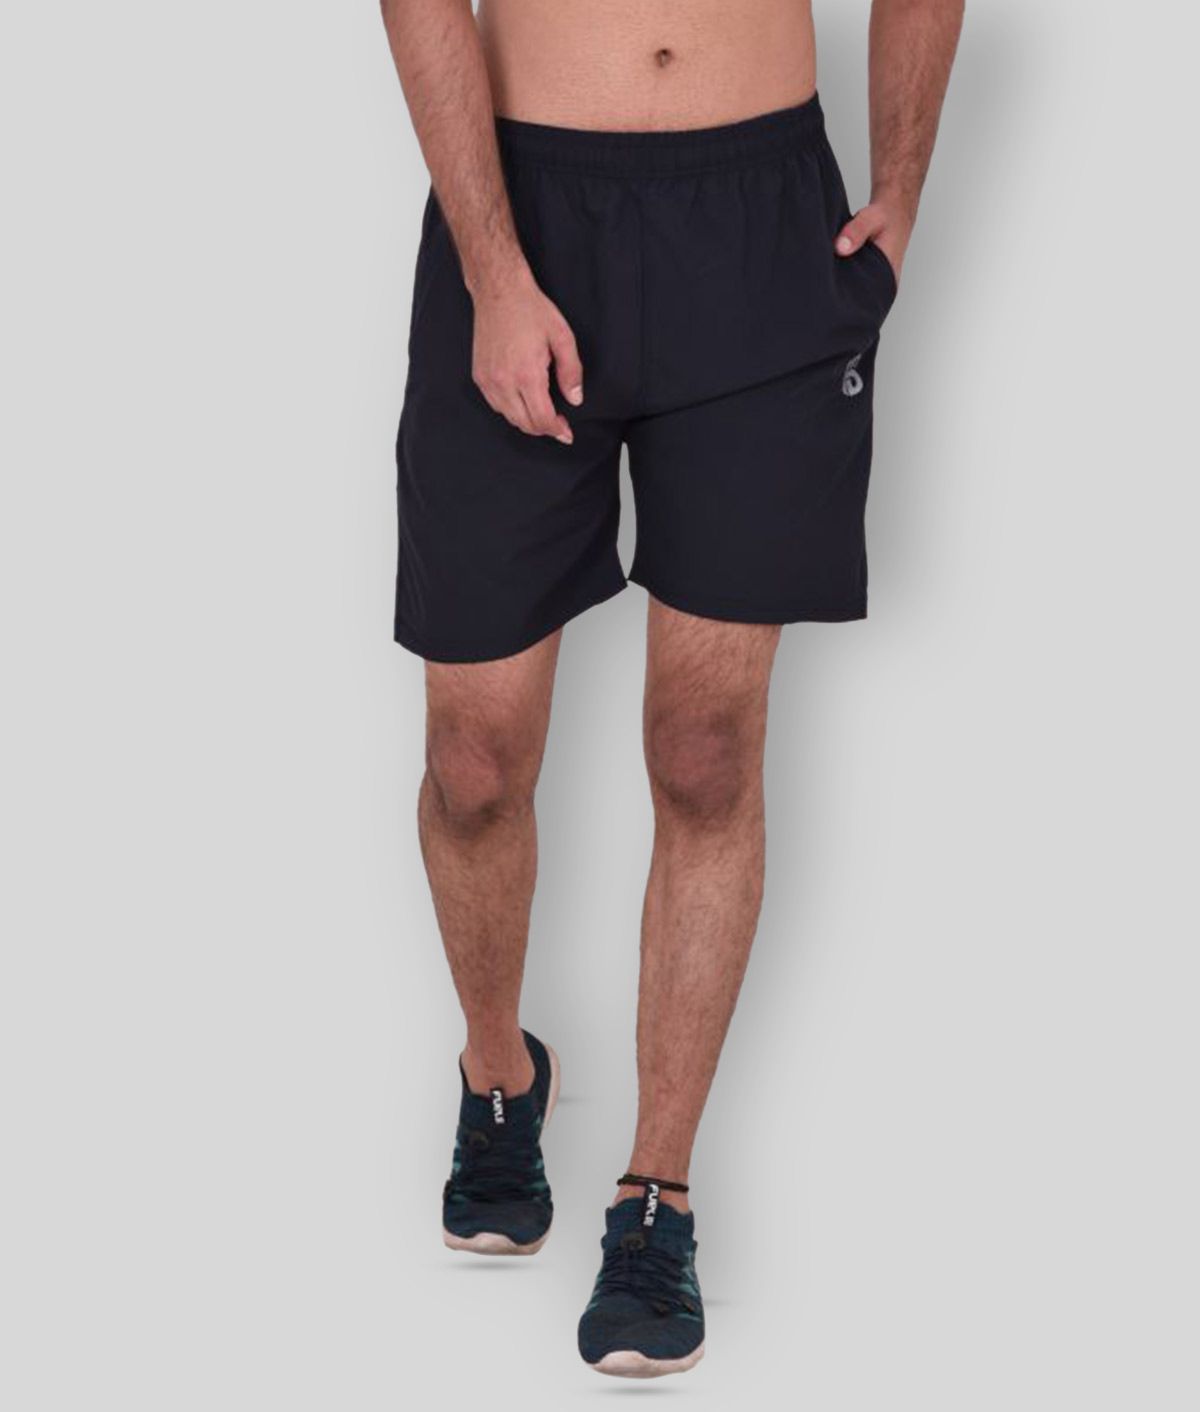     			Forbro Black Polyester Lycra Fitness Shorts